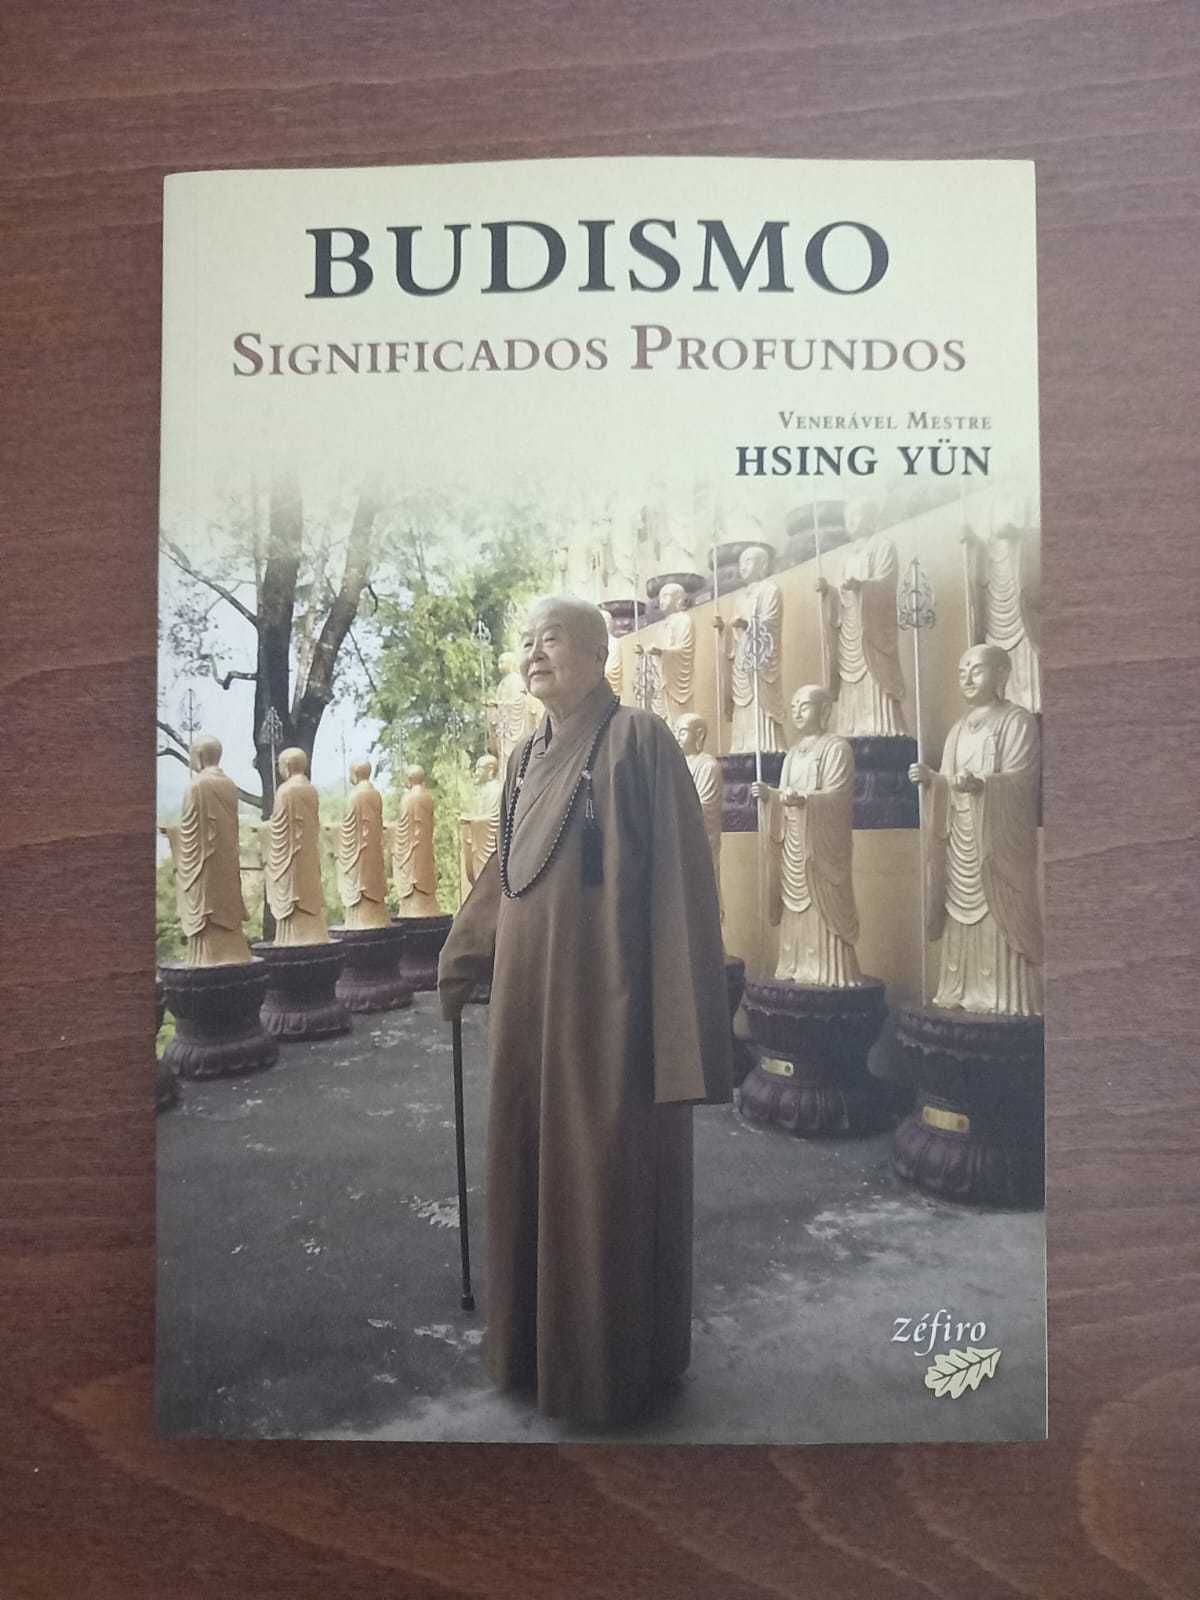 Livro "Budismo - Significados Profundos" - Hsing Yün